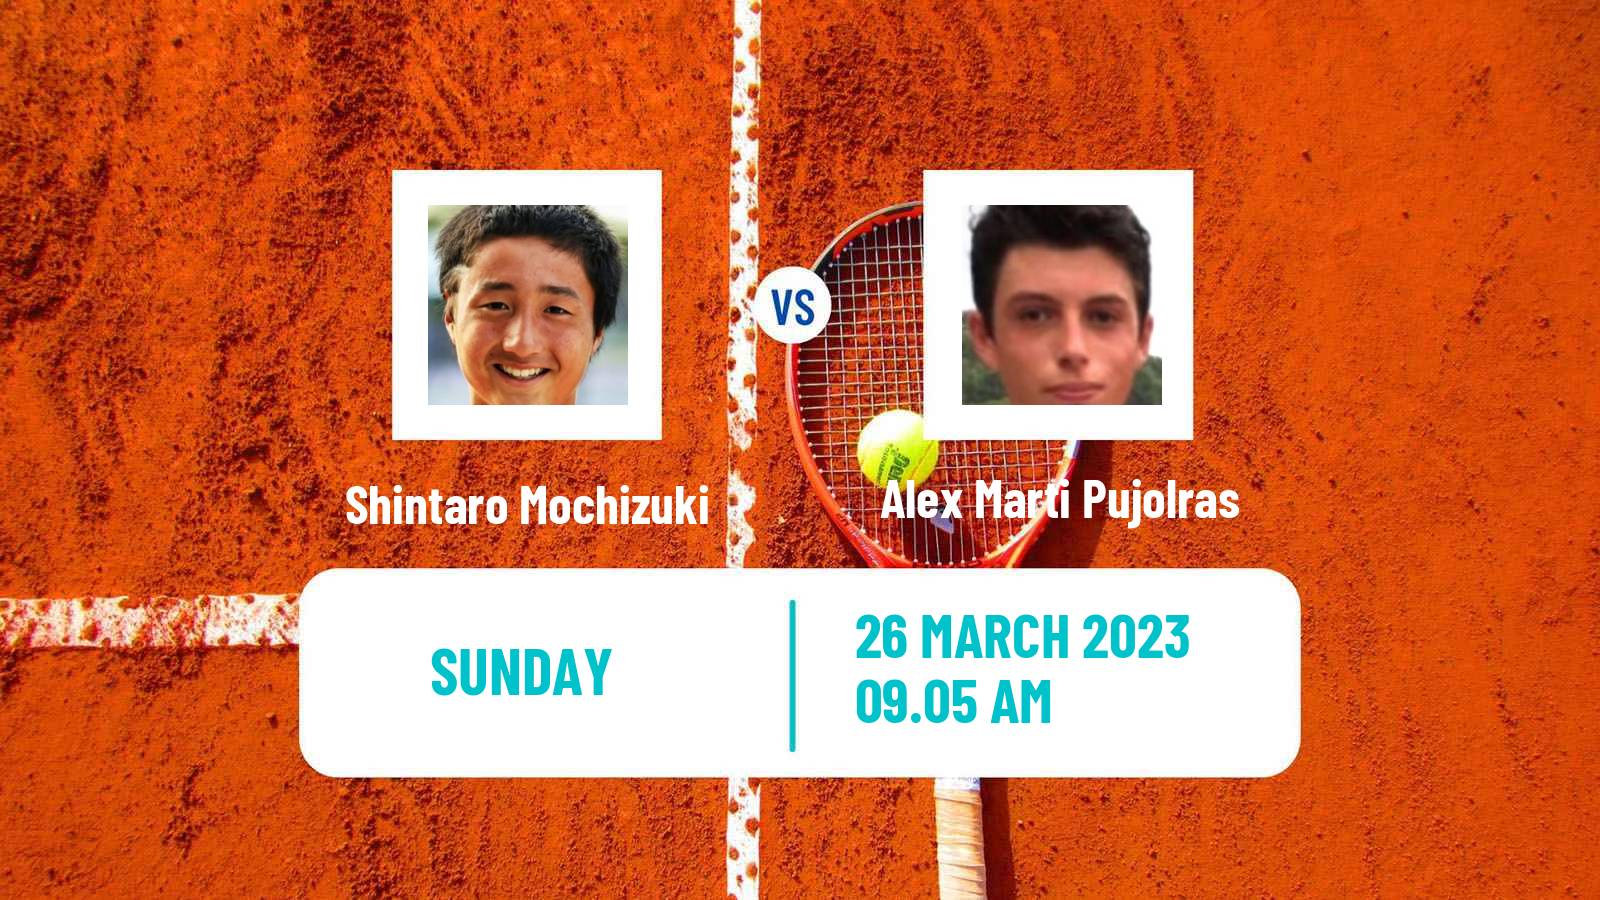 Tennis ATP Challenger Shintaro Mochizuki - Alex Marti Pujolras